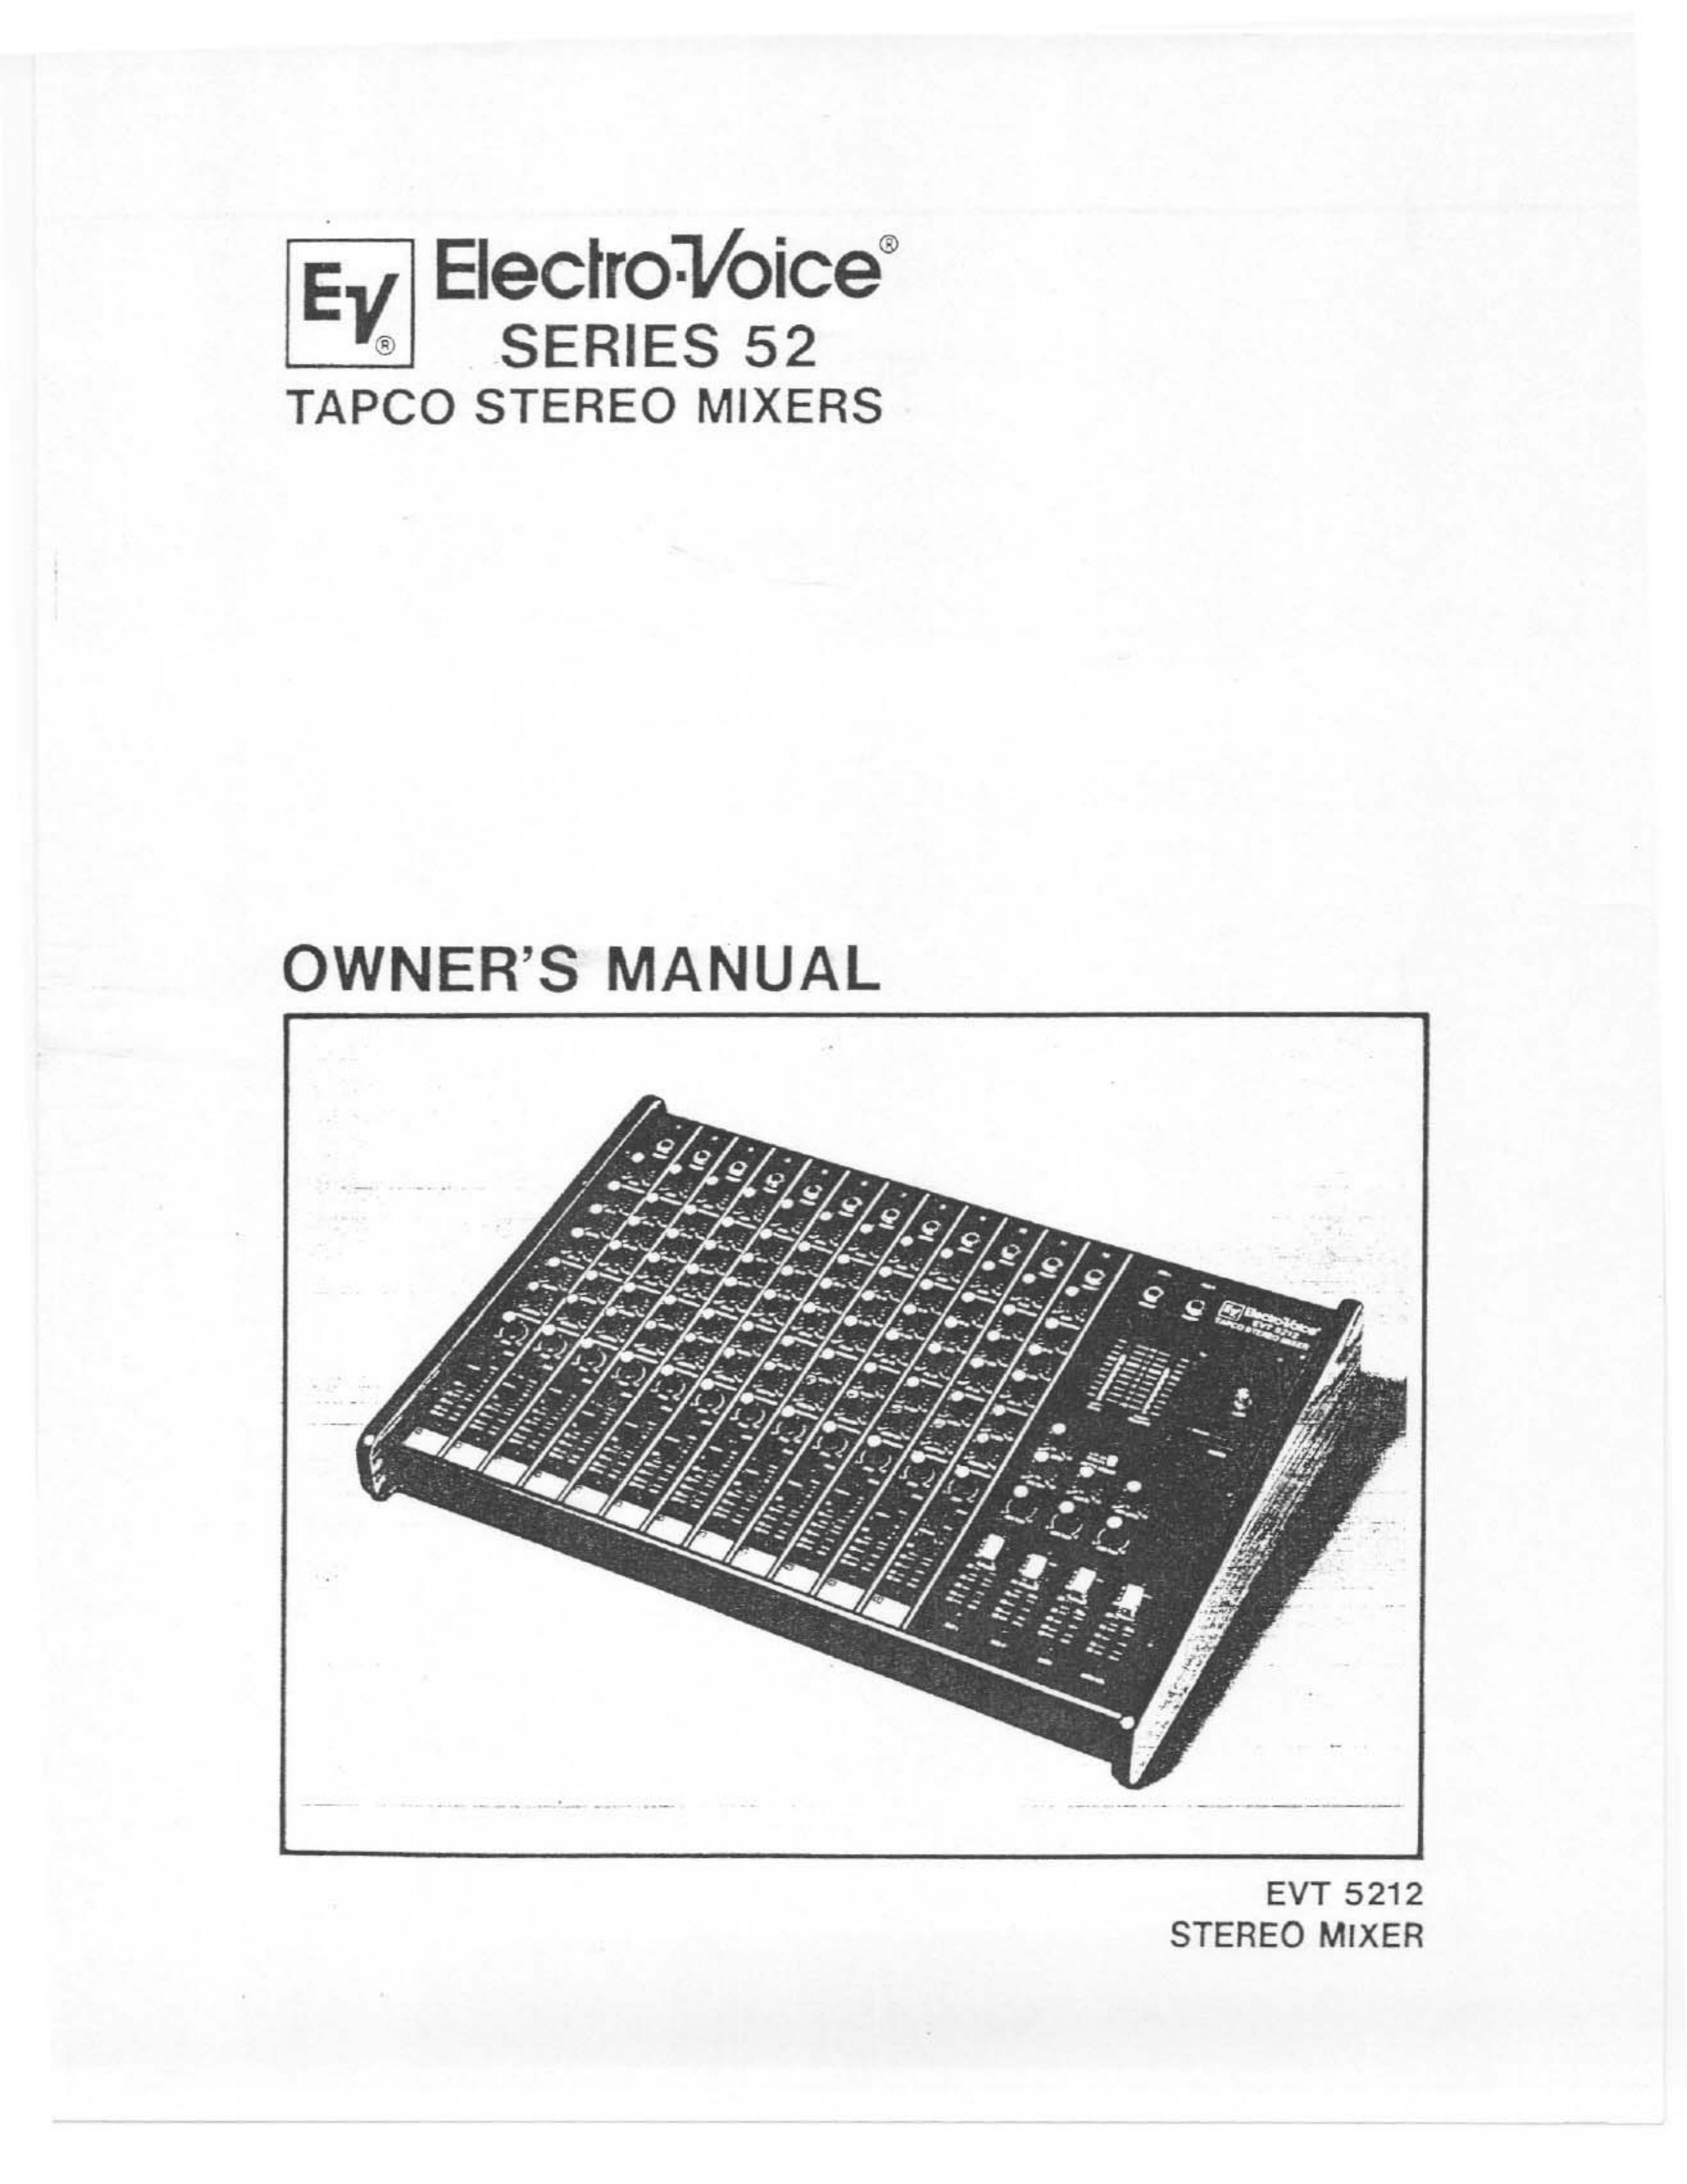 Electro-Voice Series 52 Music Mixer User Manual